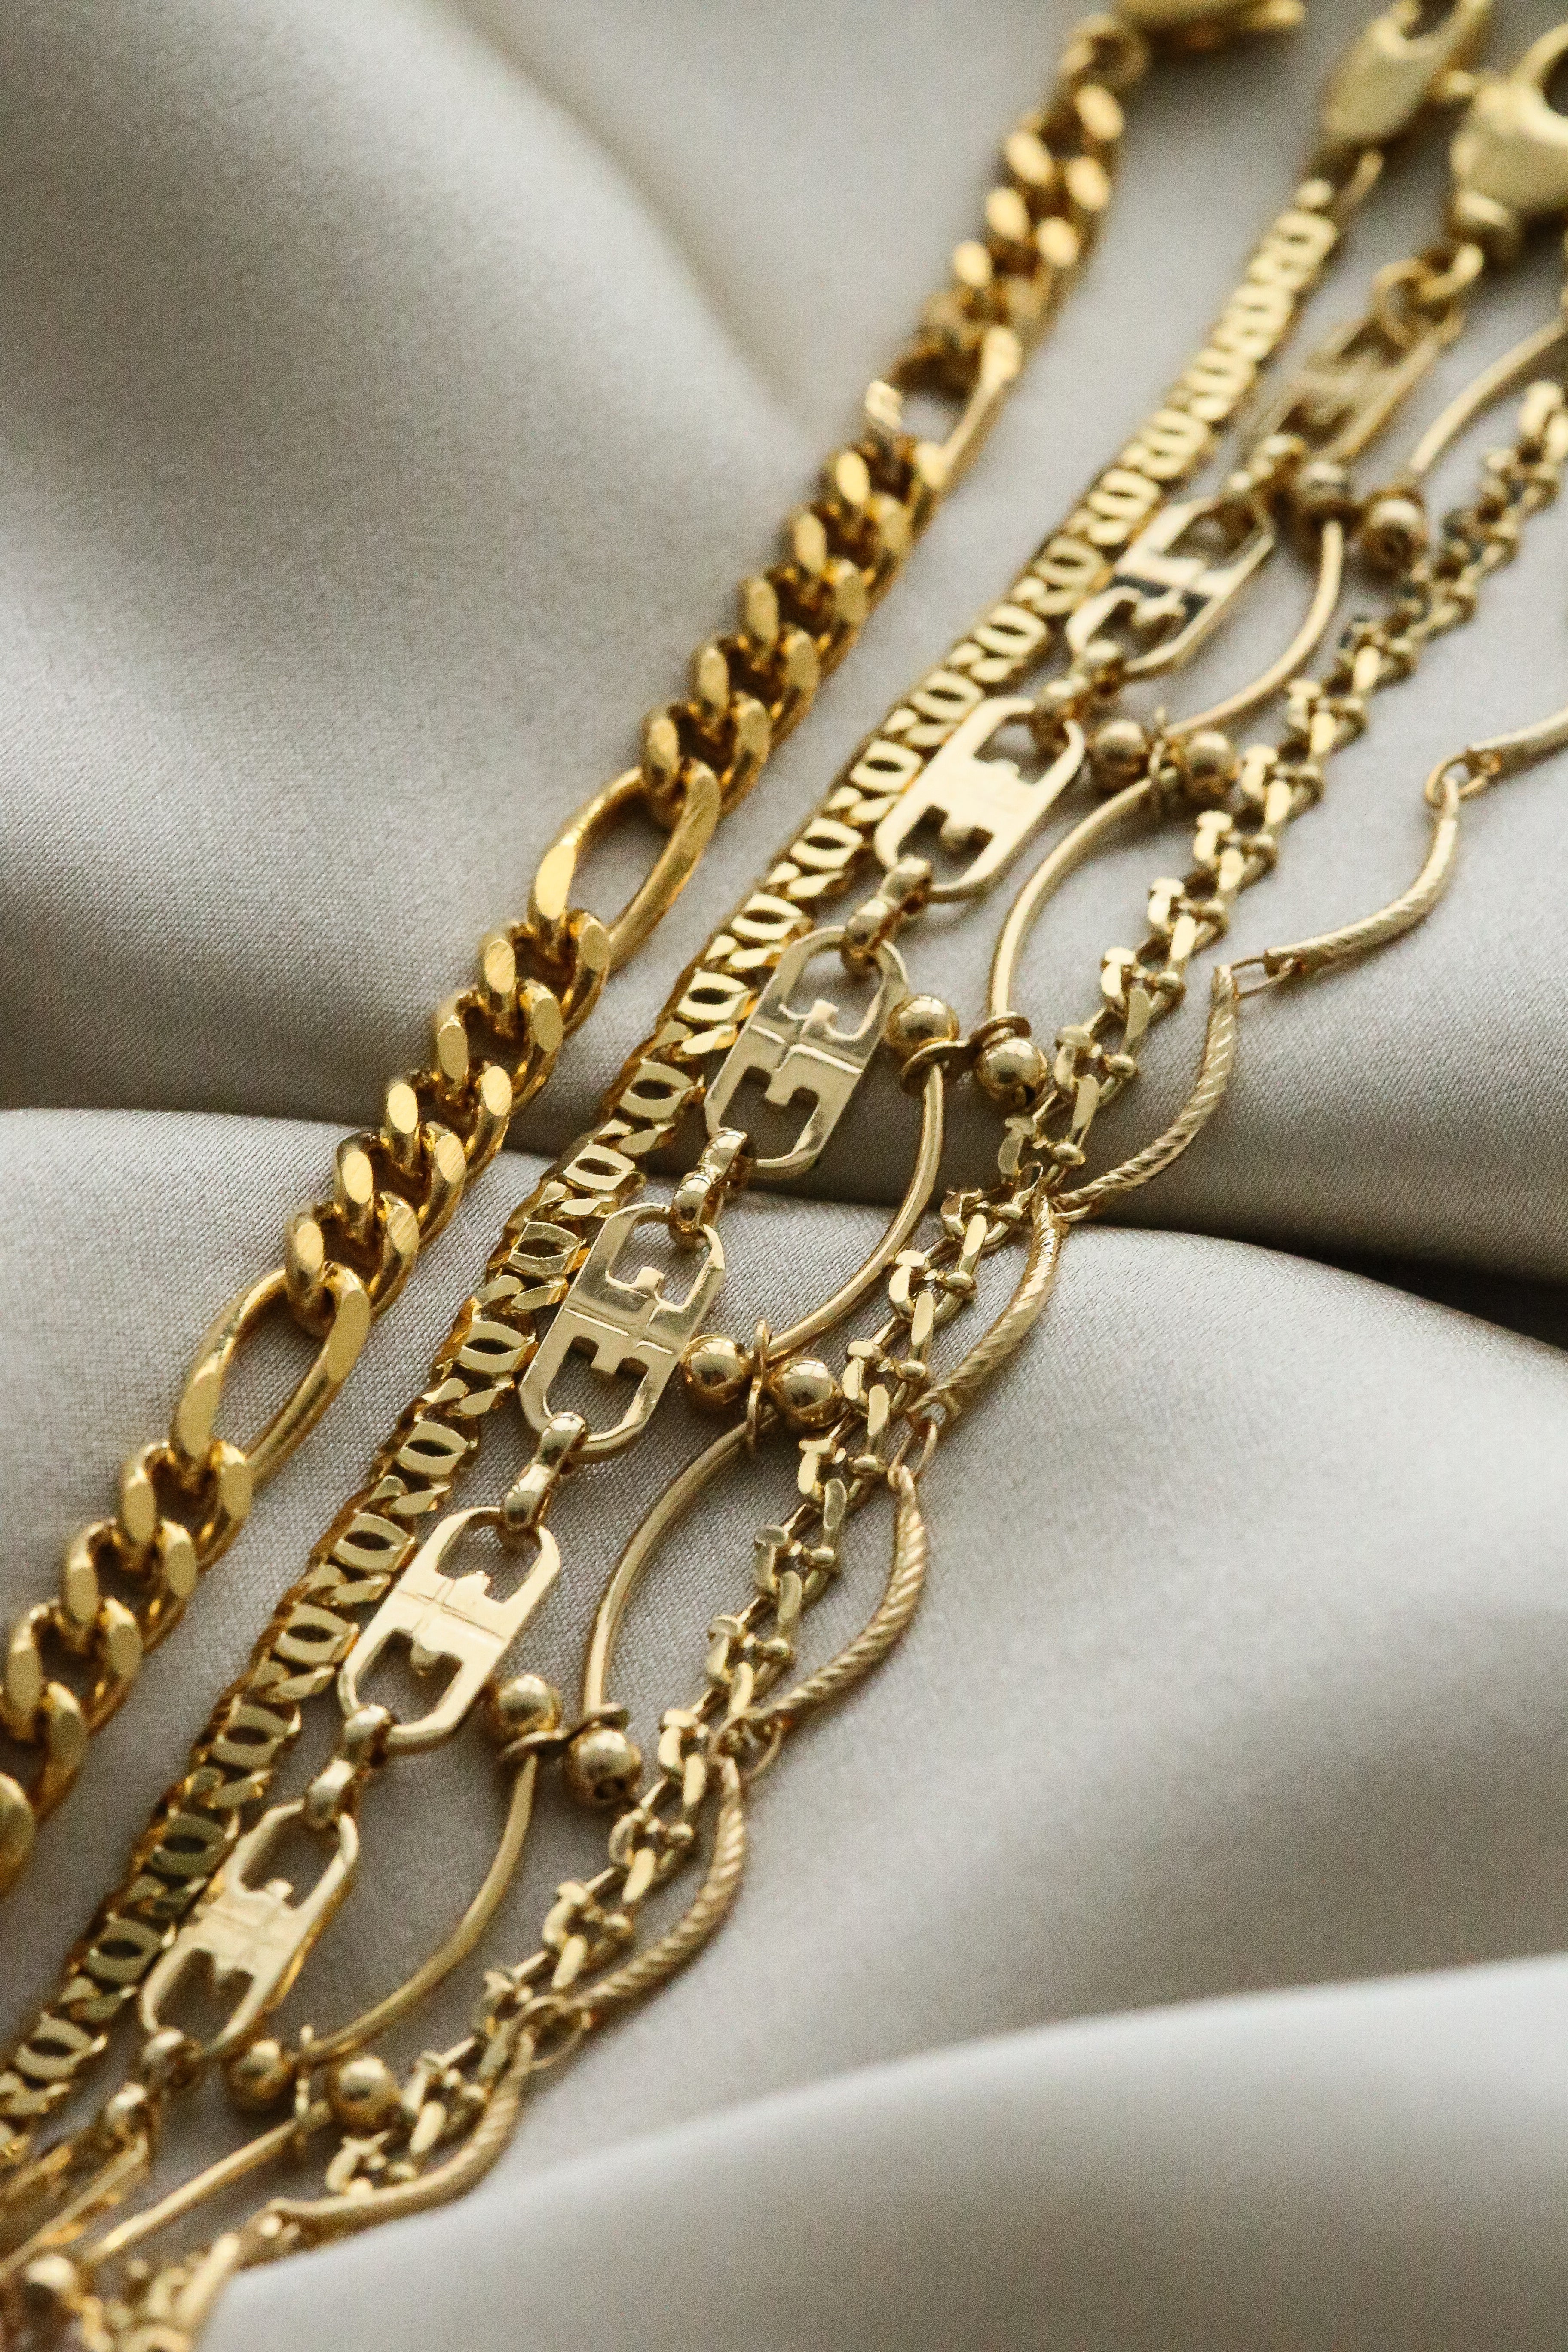 Claudette (Vintage) Chain bracelet - Boutique Minimaliste has waterproof, durable, elegant and vintage inspired jewelry